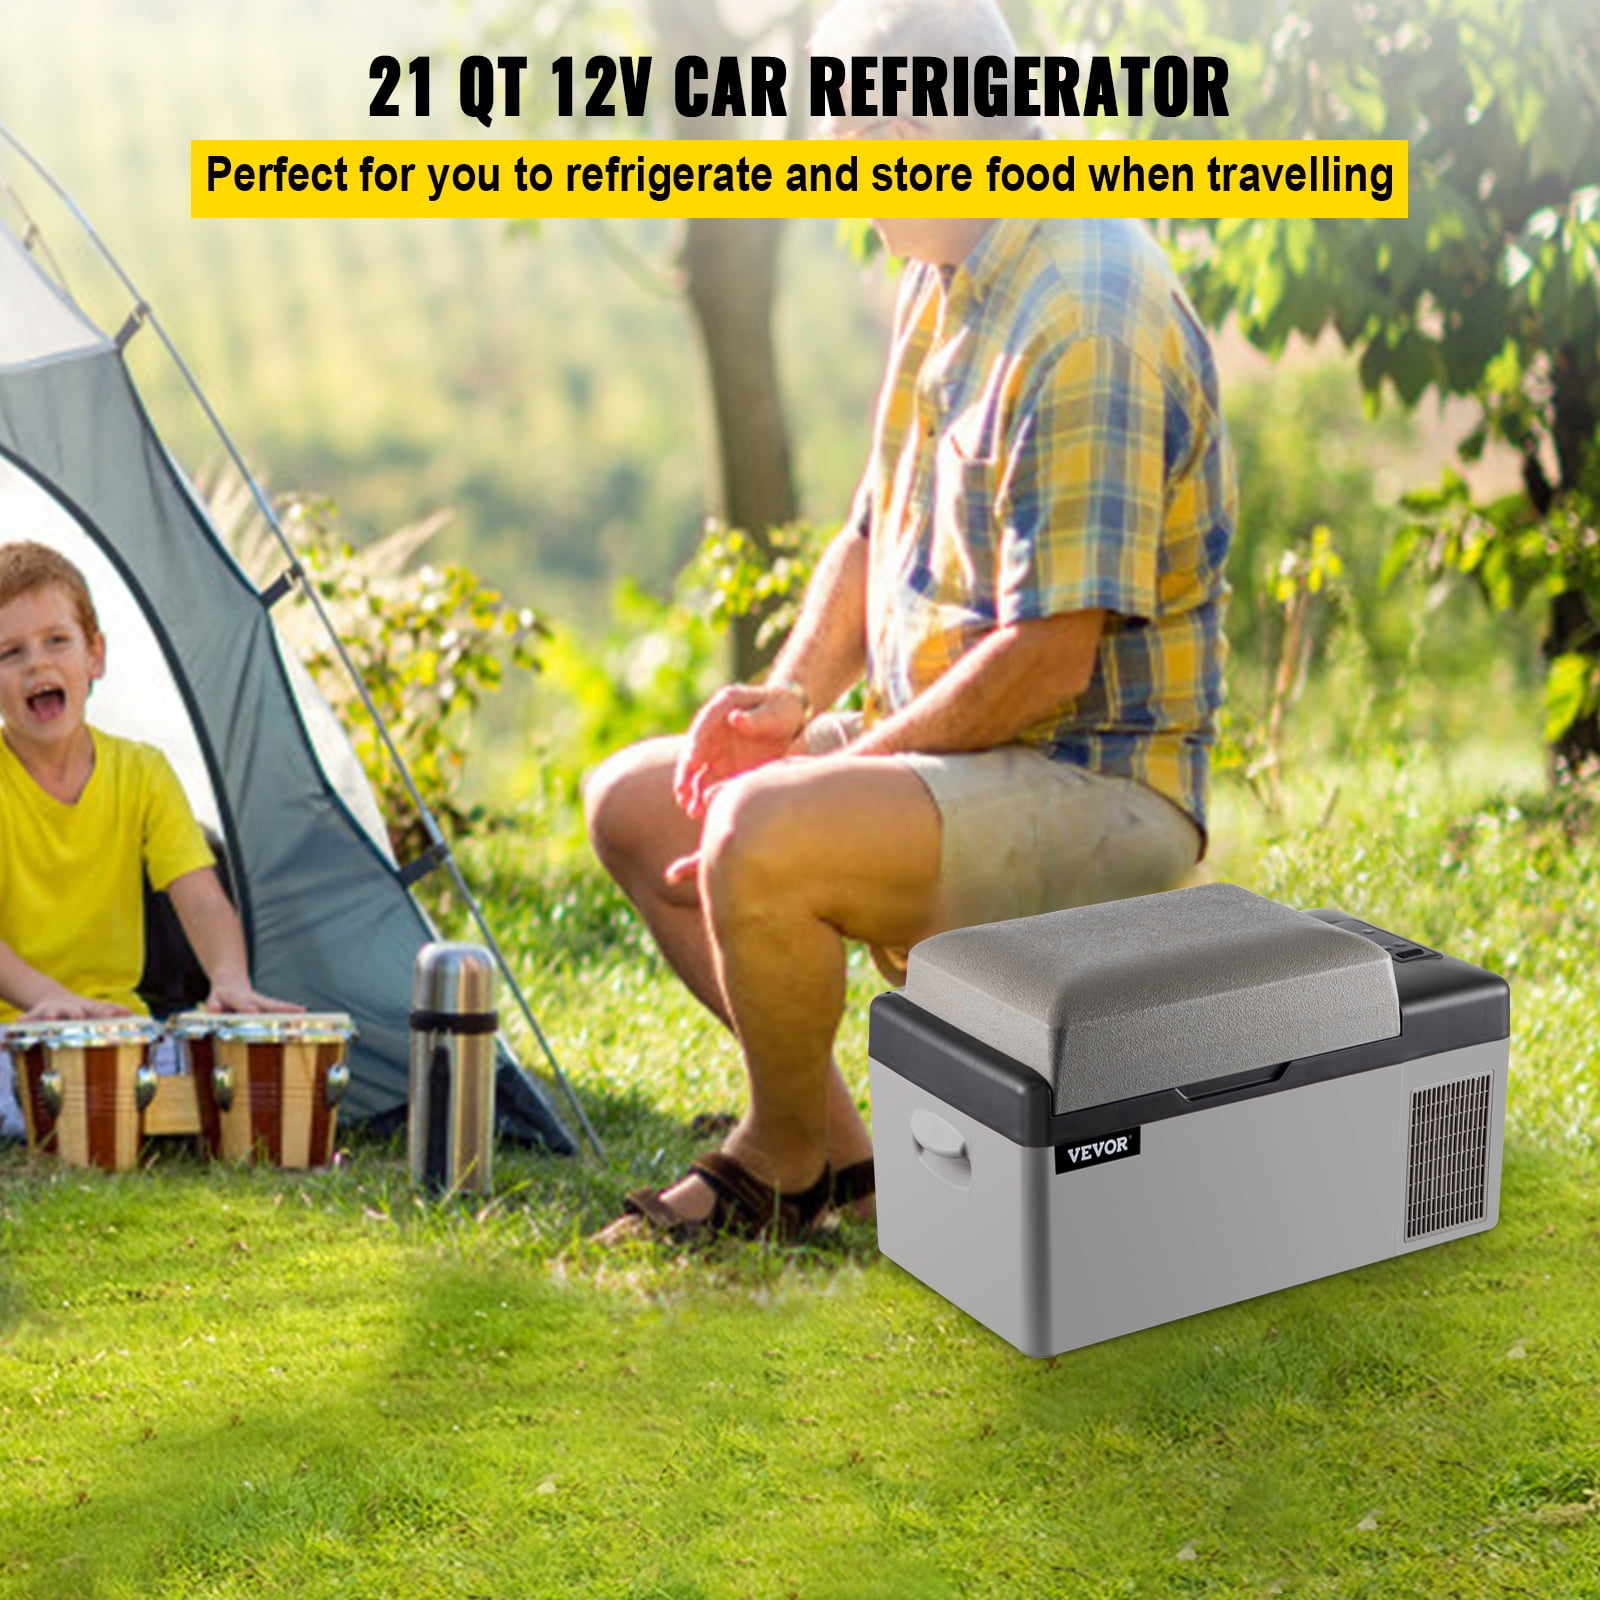 VEVORbrand Portable Car Refrigerator 21 12V Electric Cooler for Car, Vehicle, Truck, RV, Boat, fridge freezer for Driving, Travel, Fishing, Outdoor, DC and 110-240v AC - Walmart.com